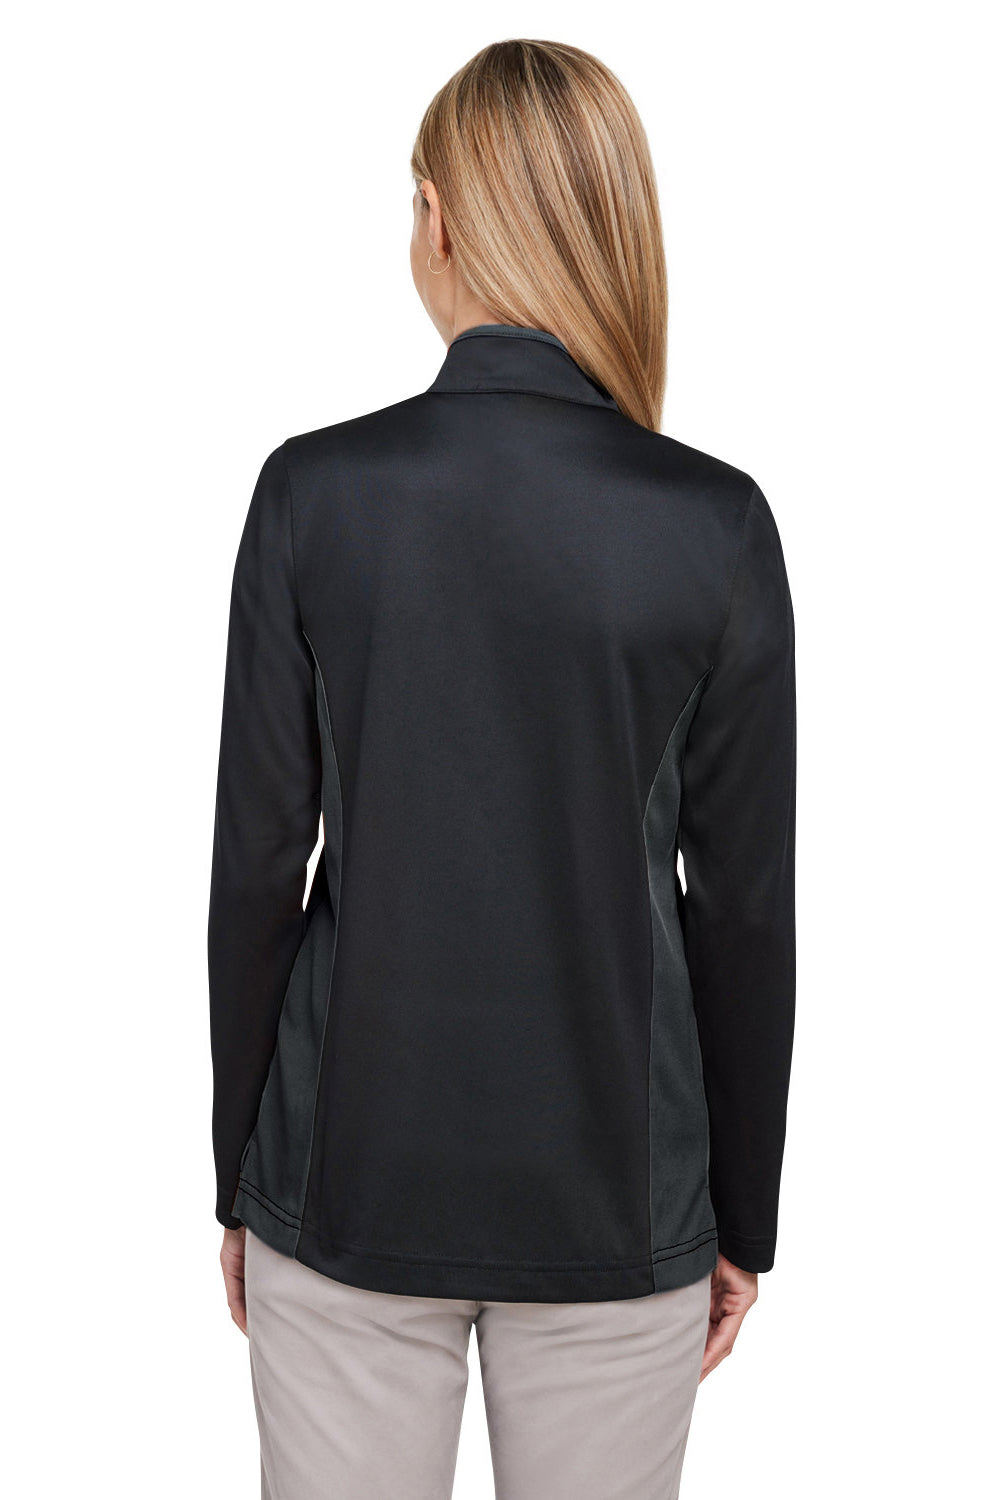 Harriton M786W Womens Flash Performance Moisture Wicking Colorblock 1/4 Zip Sweatshirt Black/Dark Charcoal Grey Back